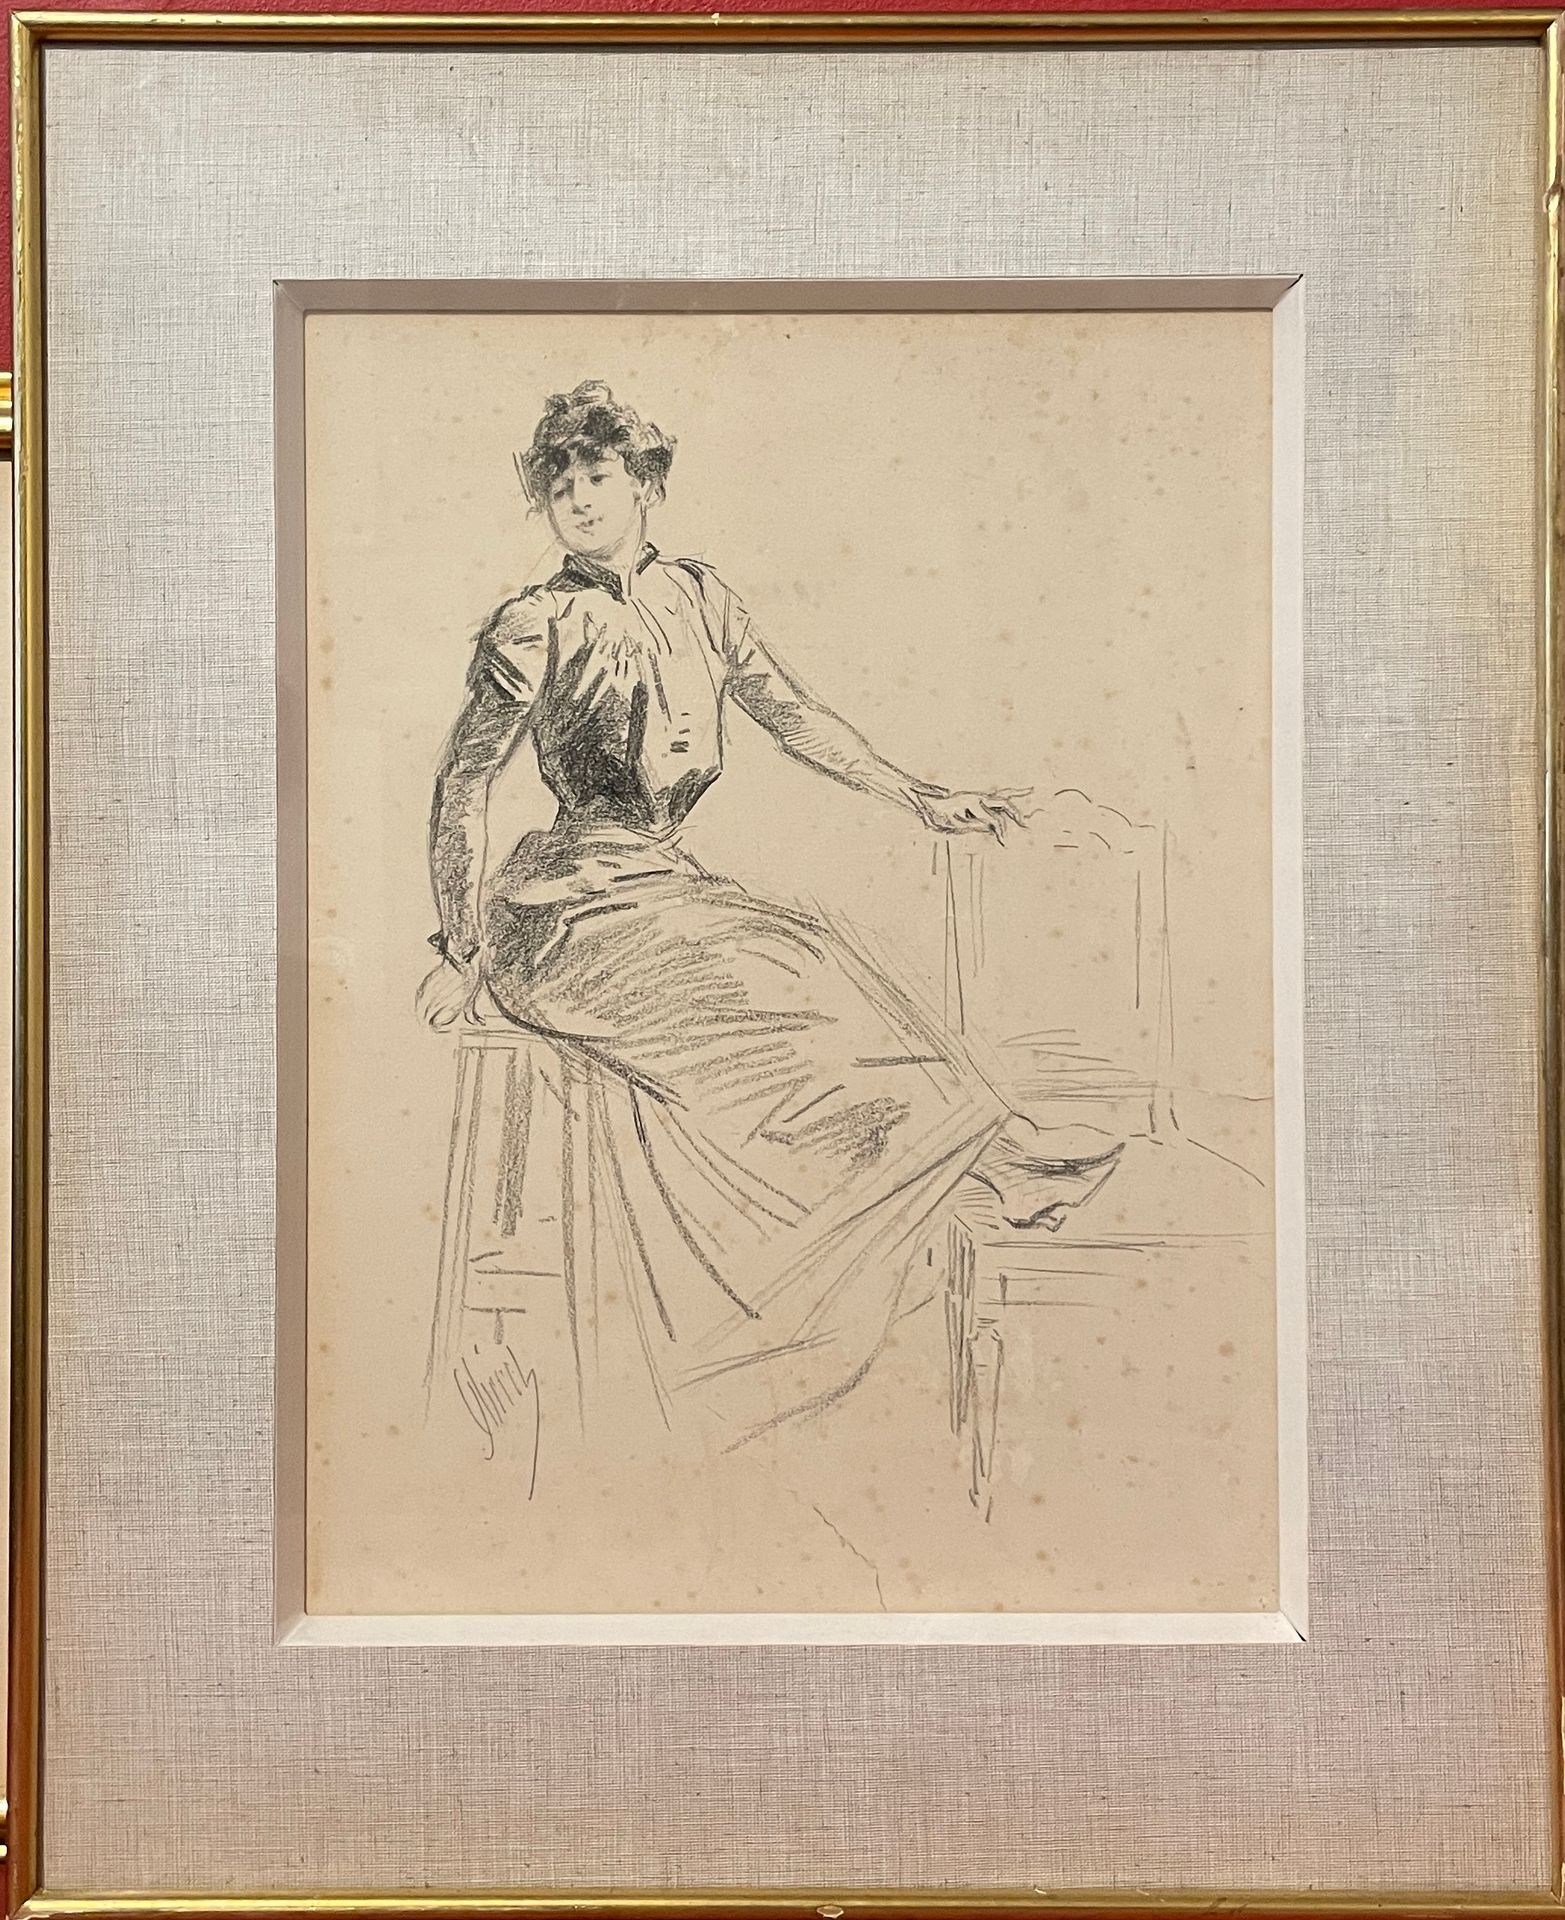 Null 儒勒-谢雷 (1836 - 1932)

女人在凳子上摆姿势

炭质

35 x 26 cm

左下方有签名

污渍